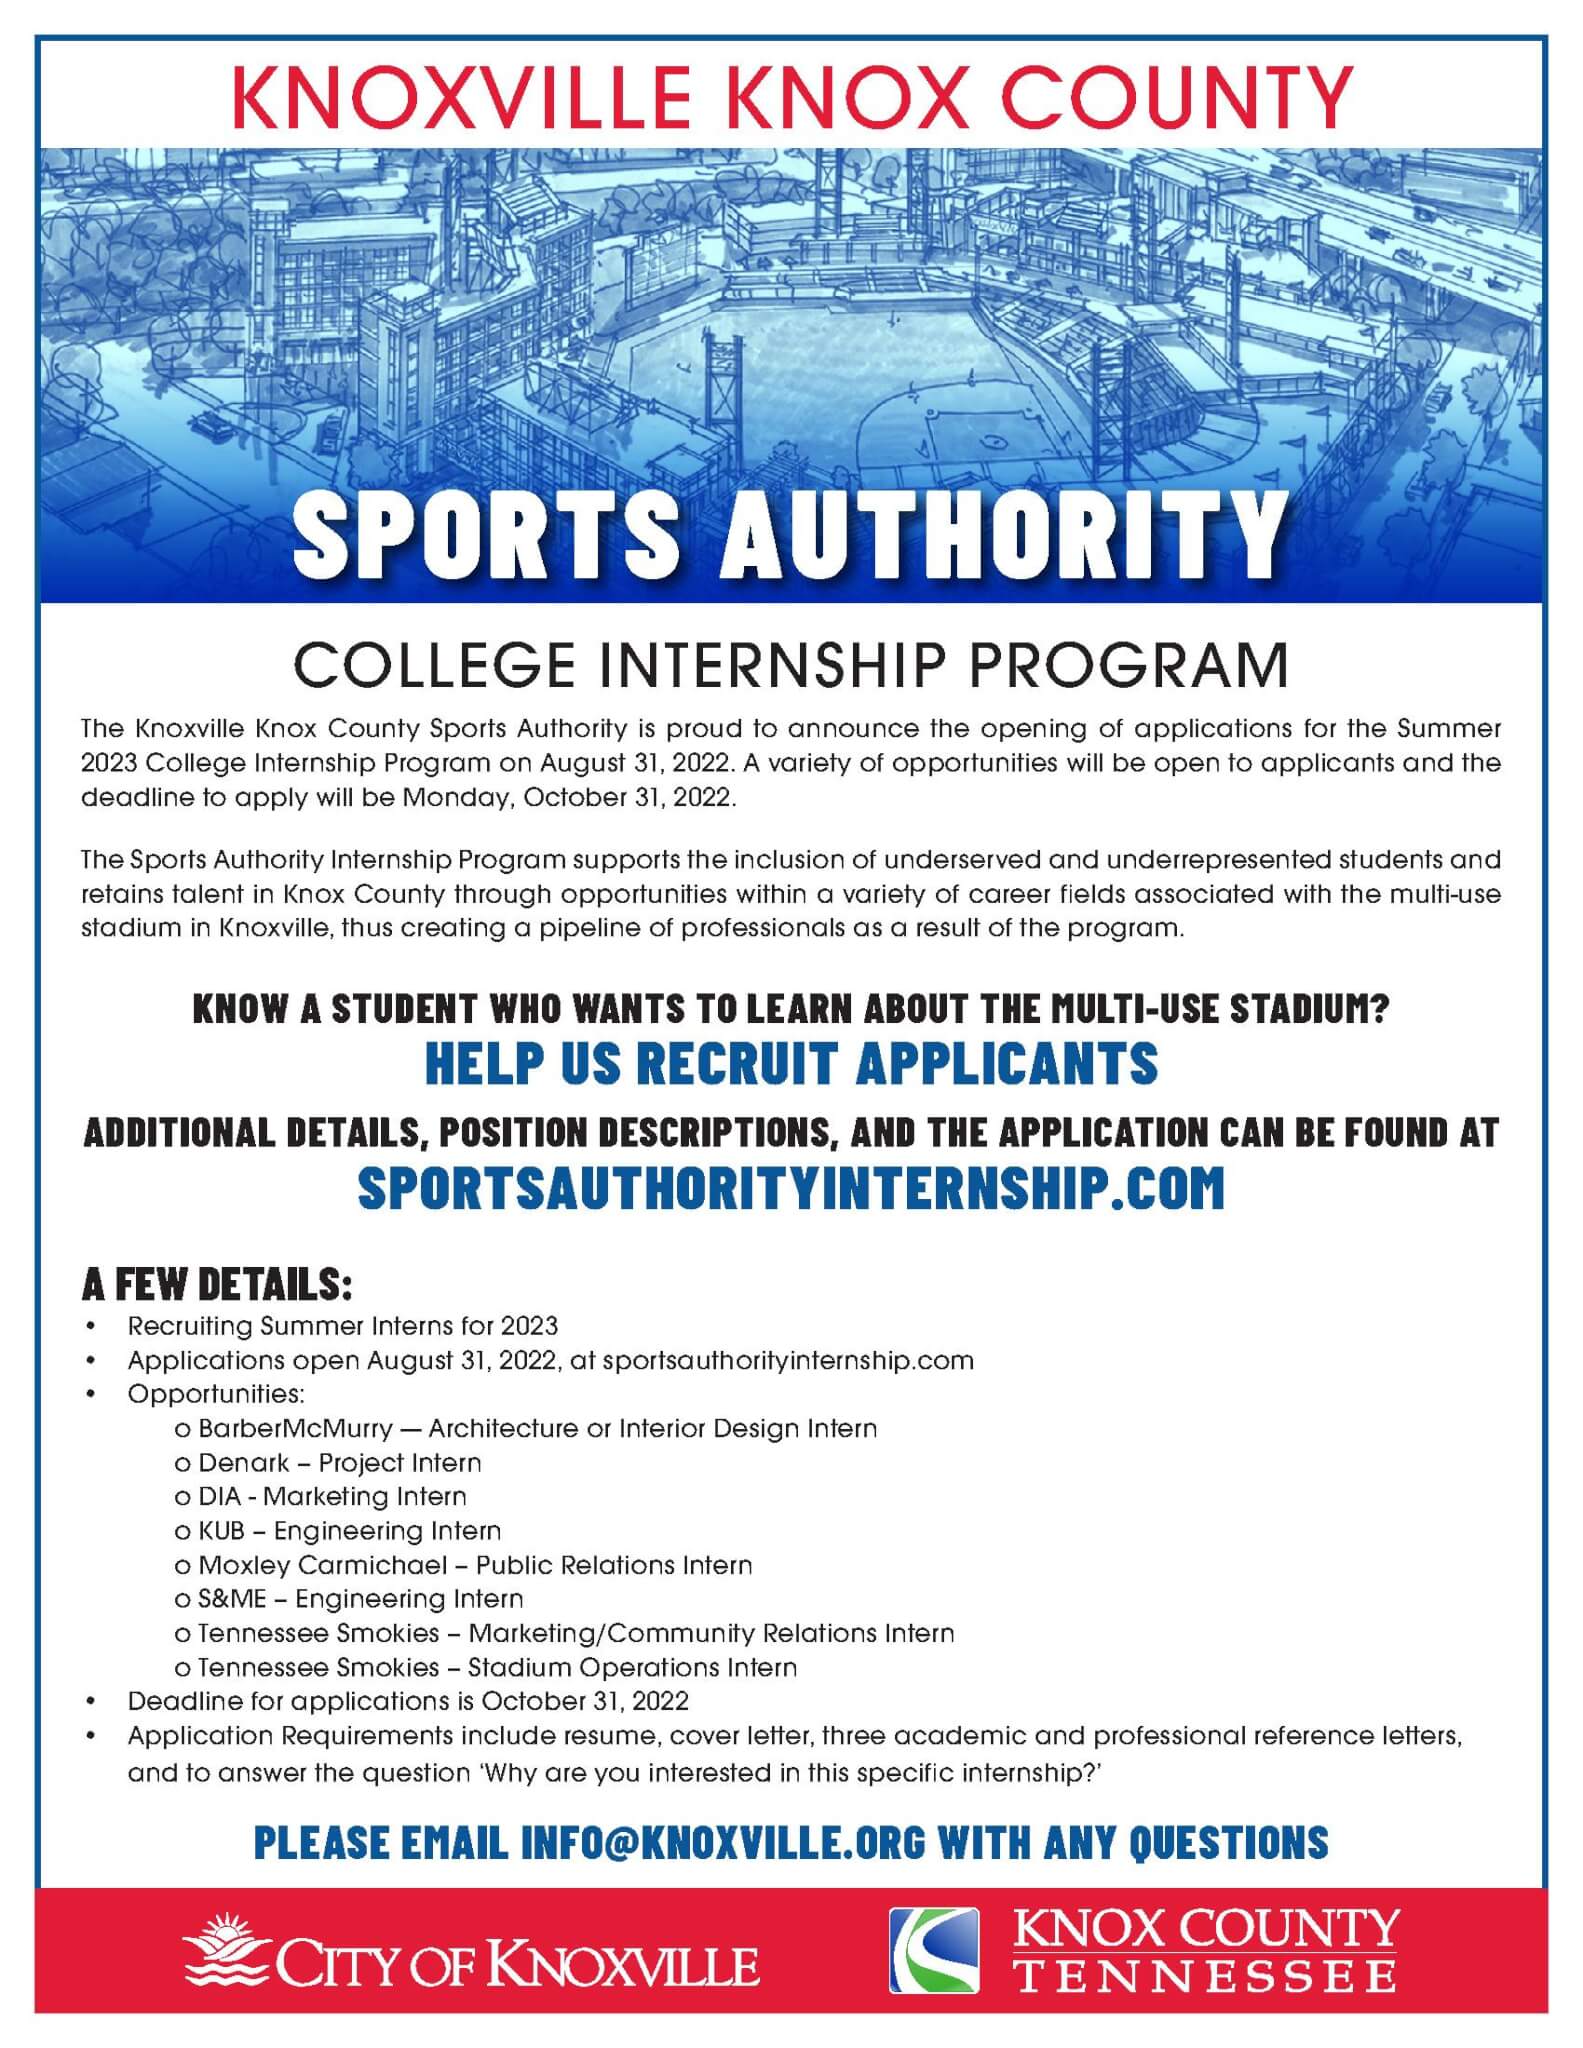 Knoxville Knox County Sports Authority Summer 2023 Internship Program